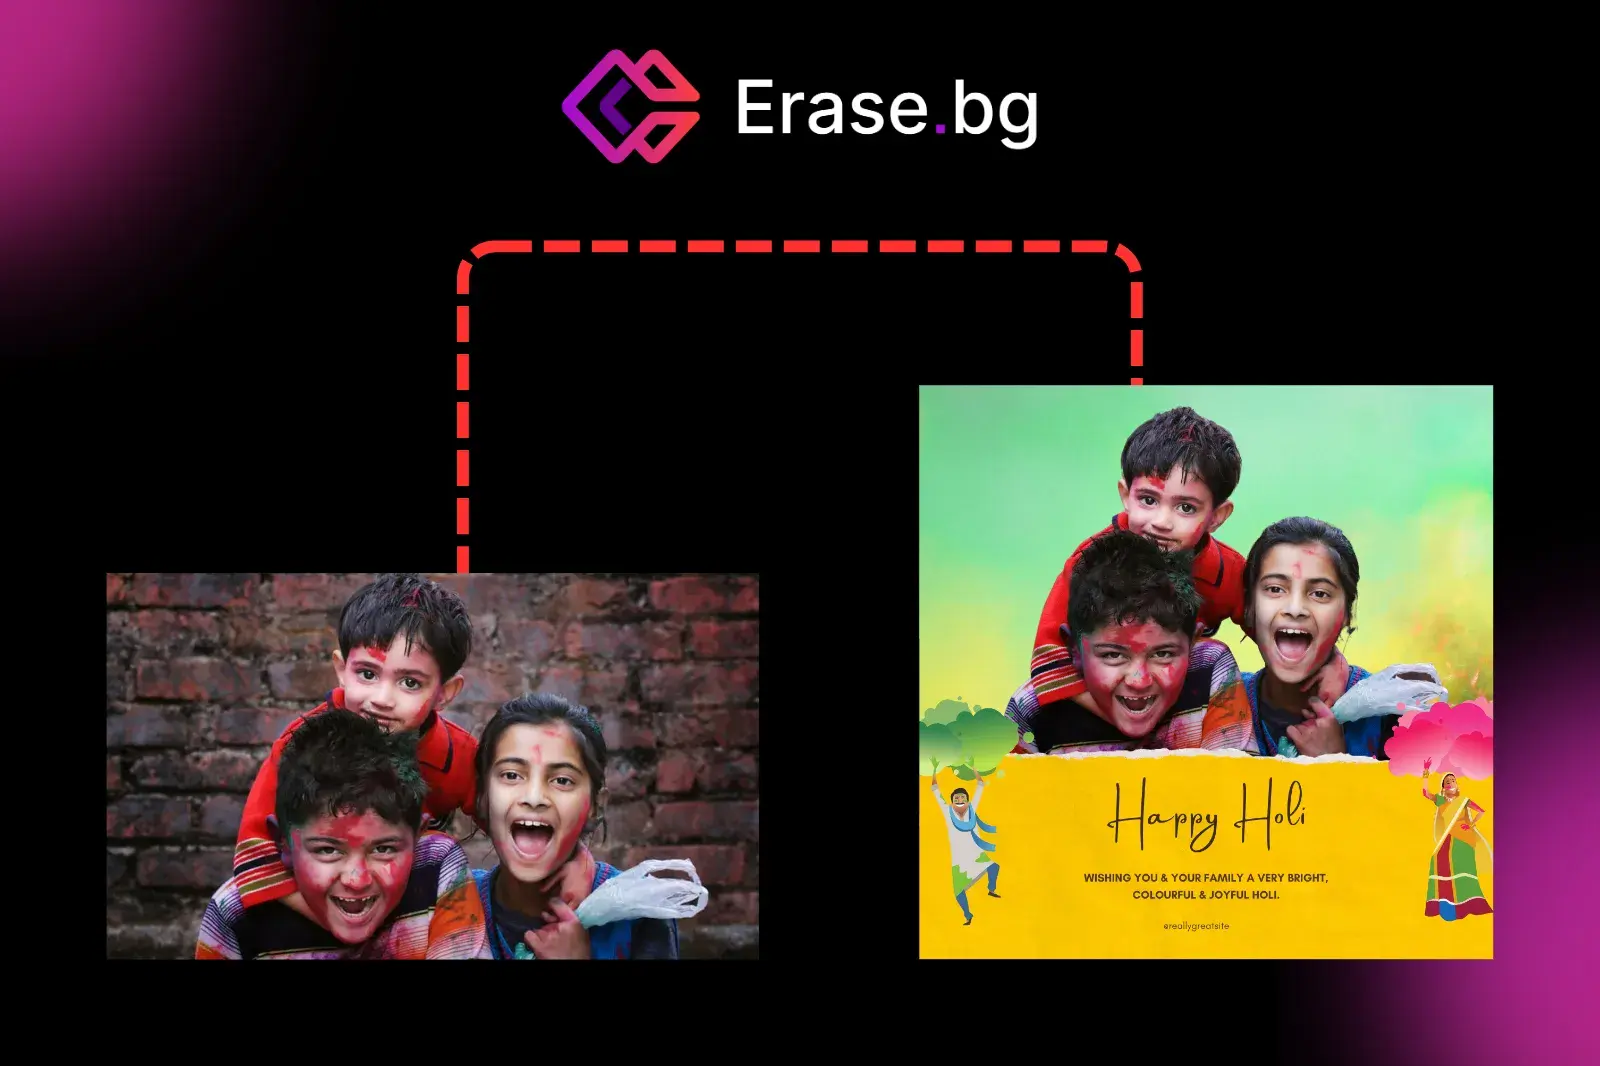 Using Erase.bg to create social media posts for Holi